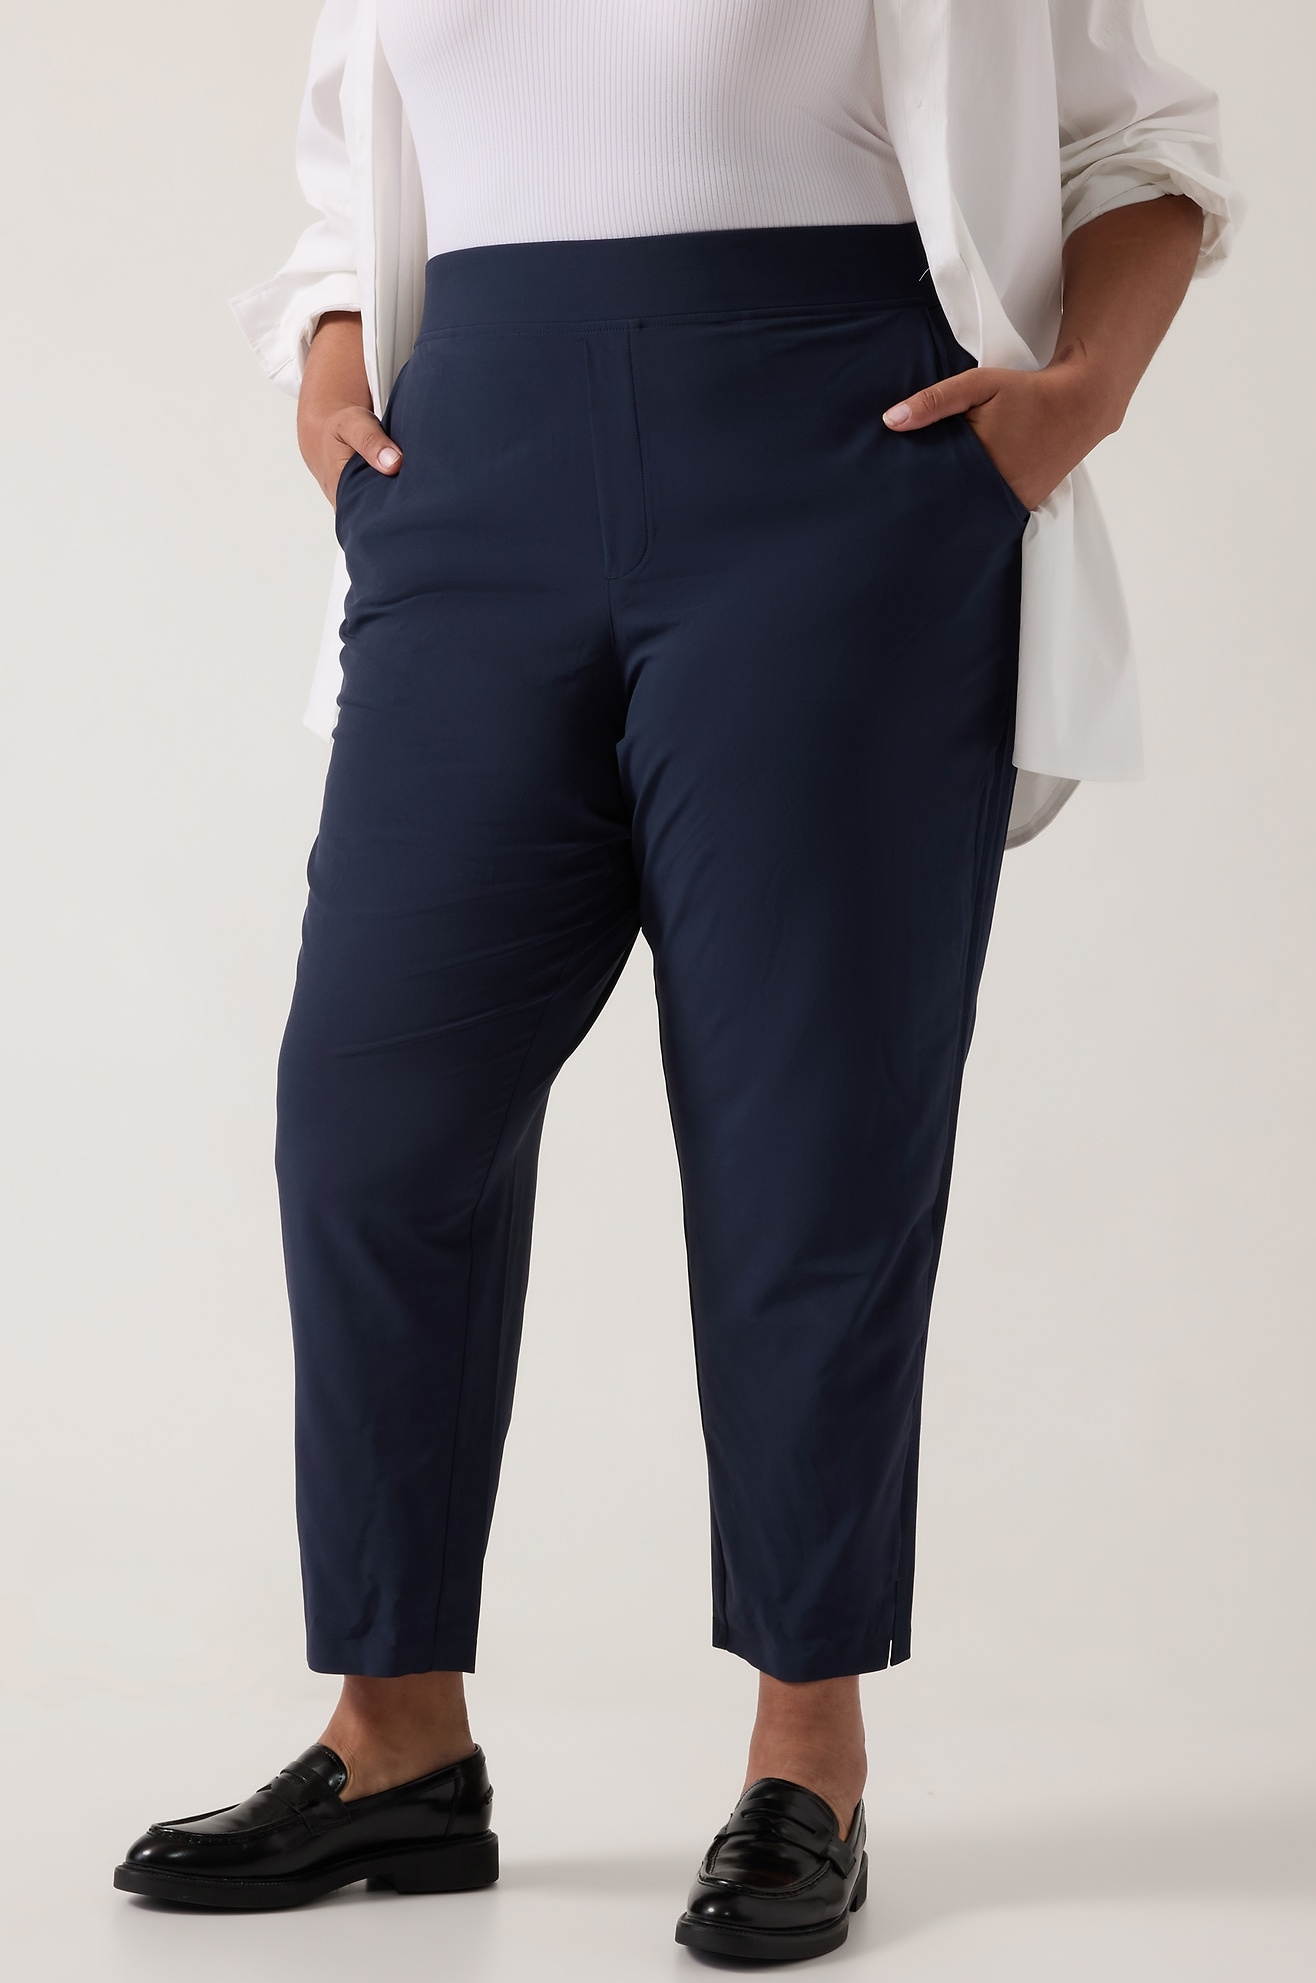 Size Crop Amber Dress Betabrand Yoga Pant M Pants Lite